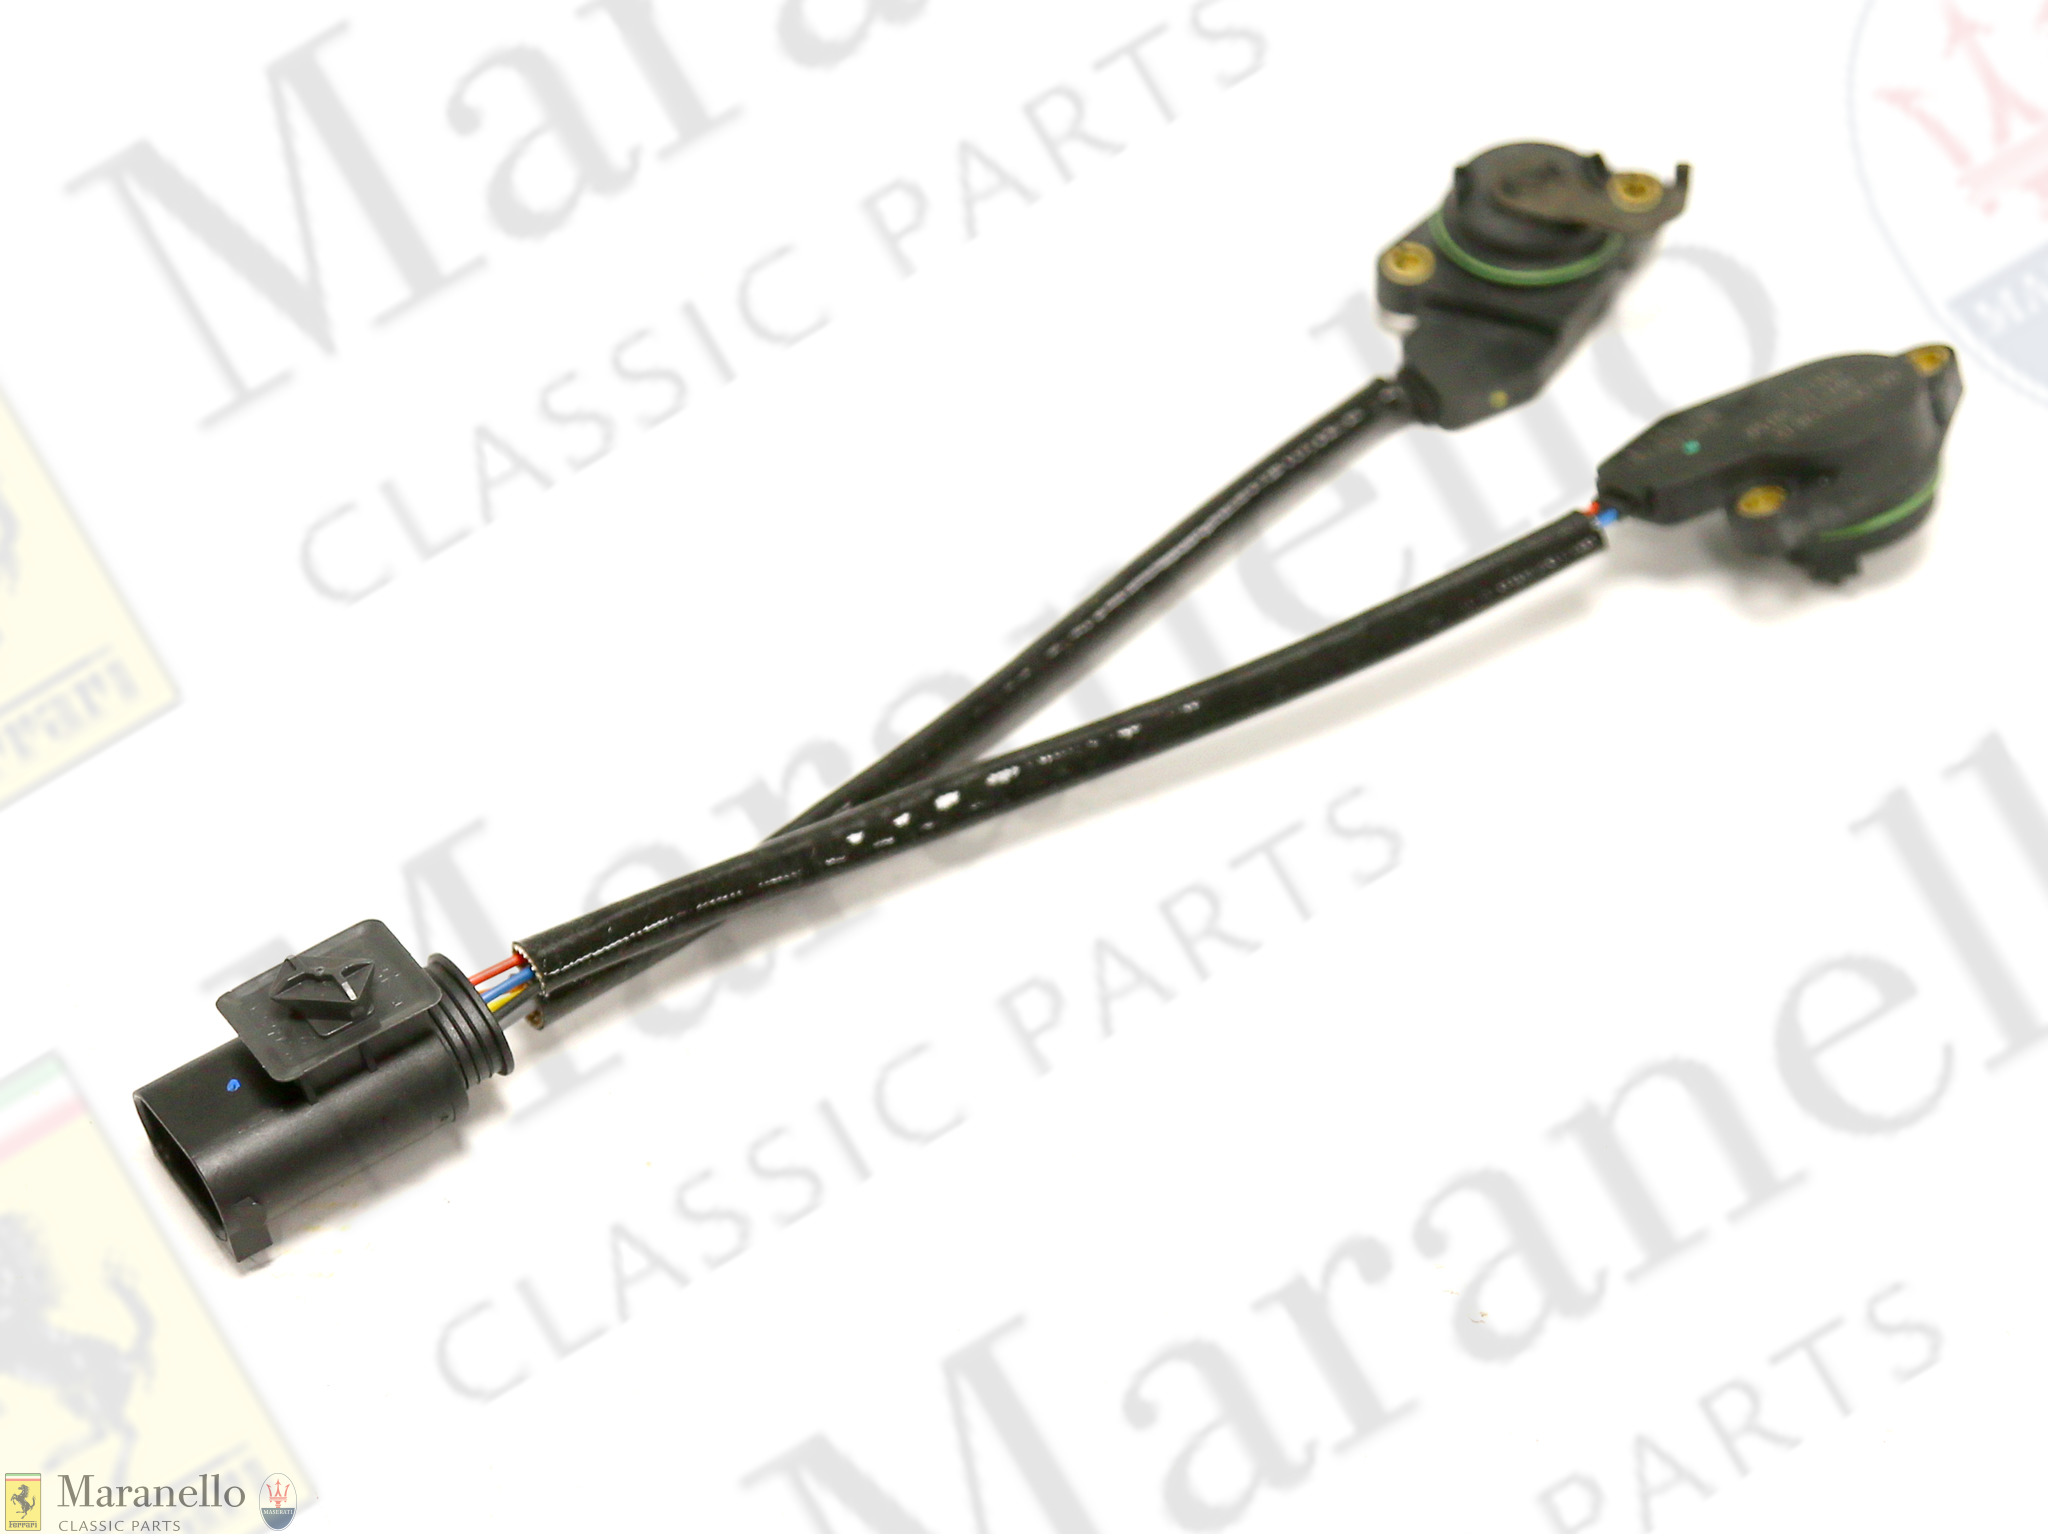 Ferrari part 248095 - Sensor Kit | Maranello Classic Parts